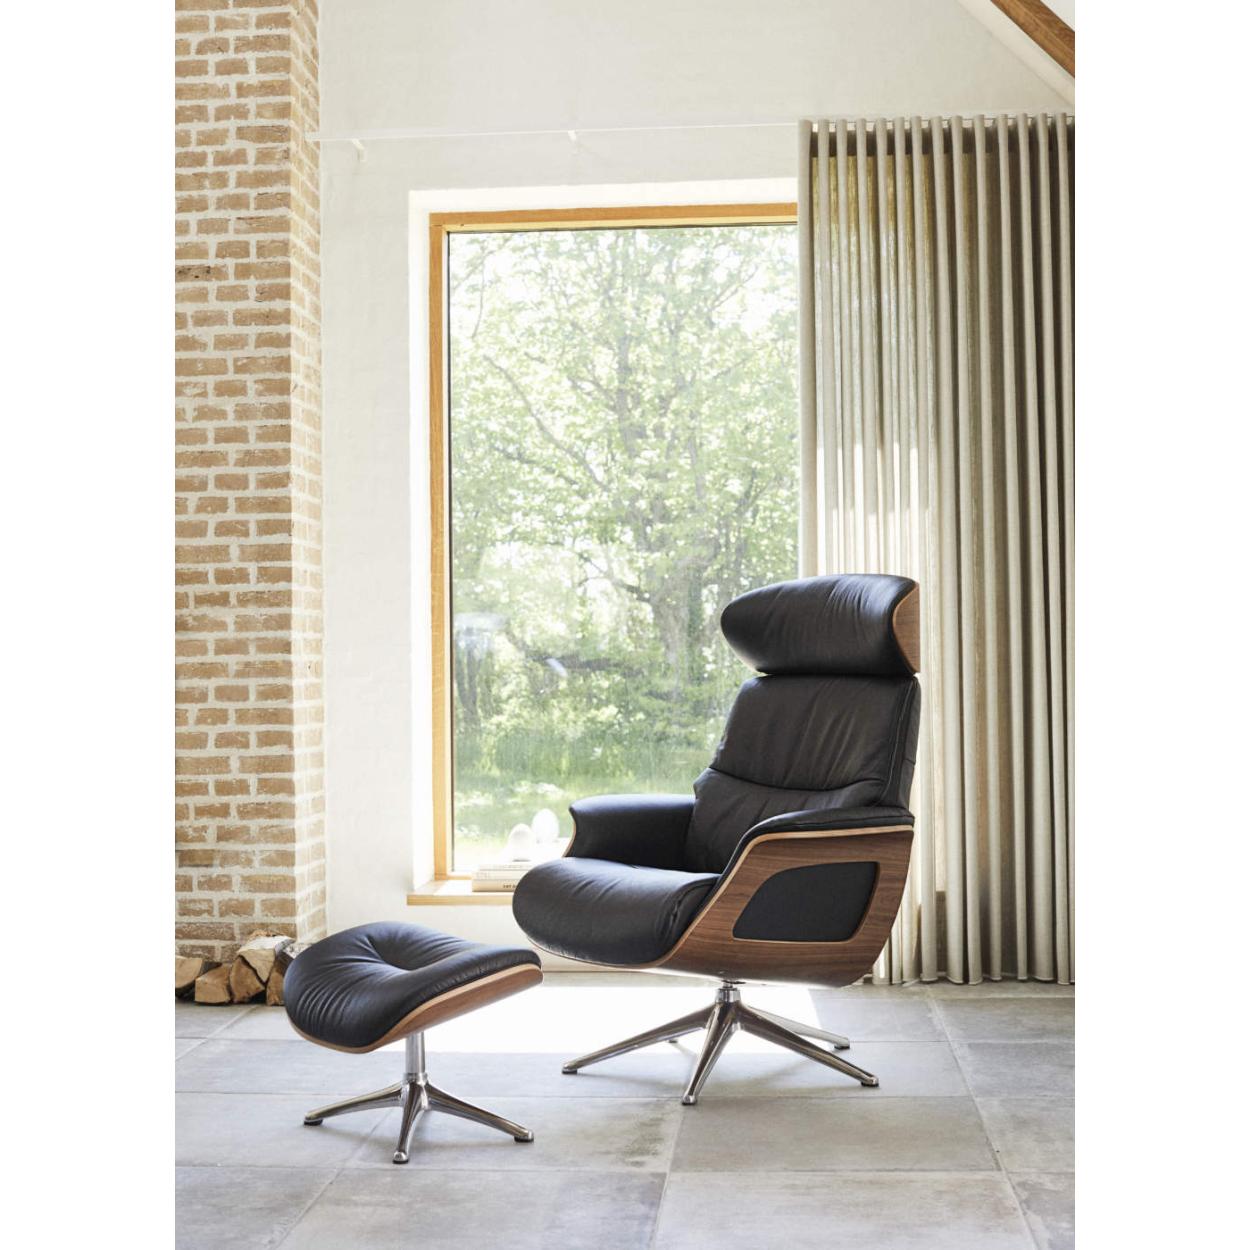 Flexlux Clement leather relax chair // Clement bőr relax fotel